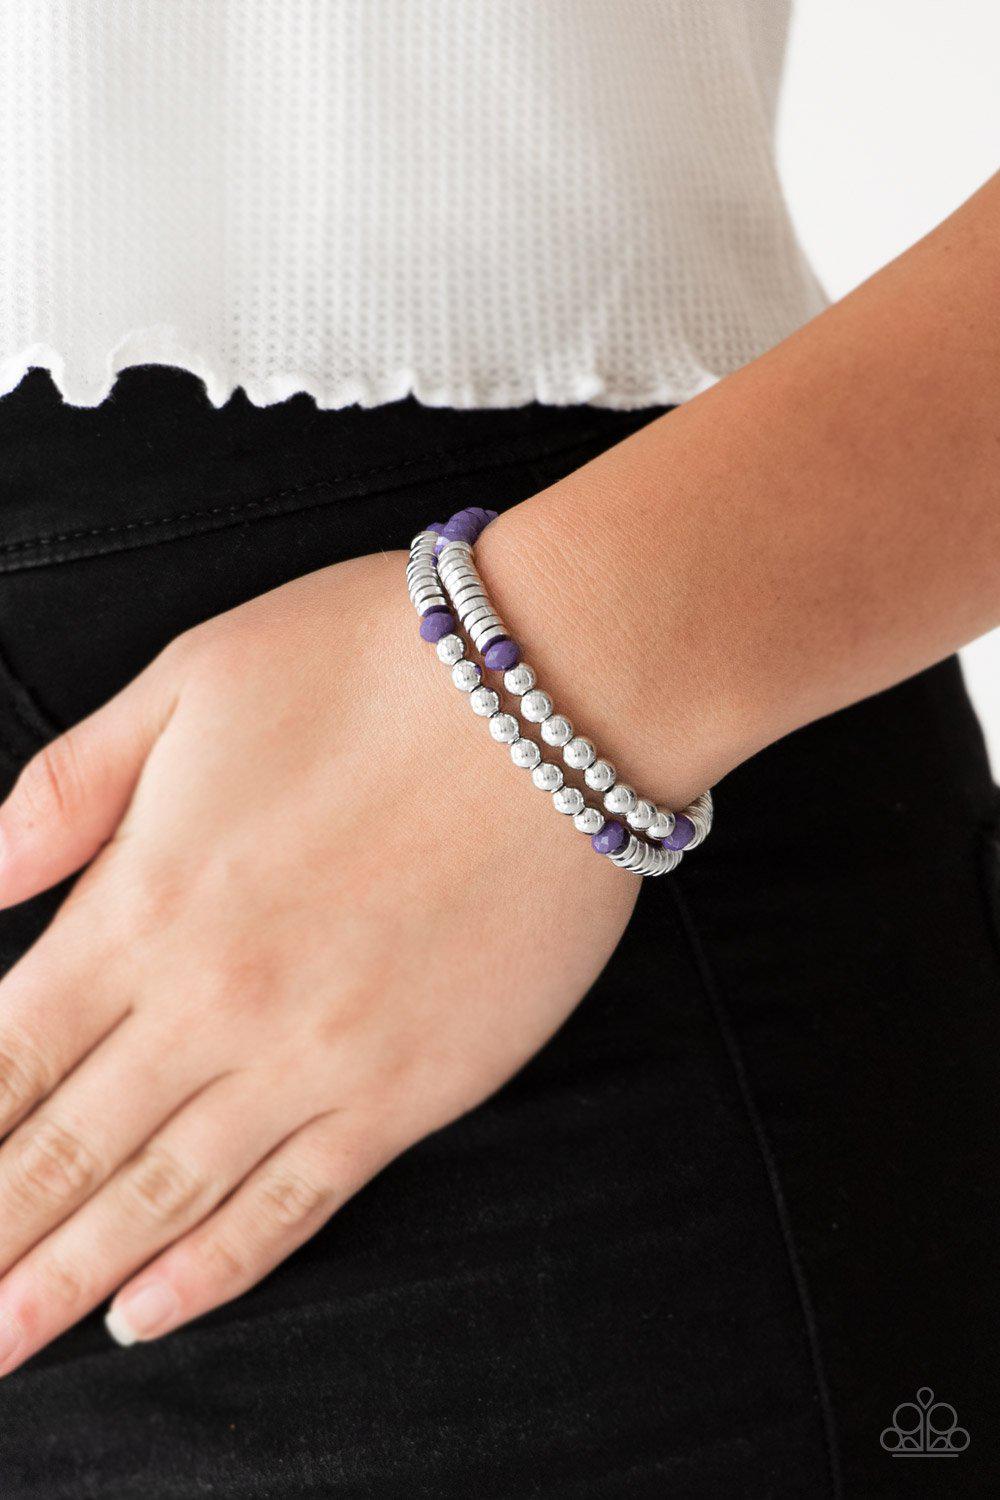 Downright Dressy Purple and Silver Stretch Bracelet Set - Paparazzi Accessories-CarasShop.com - $5 Jewelry by Cara Jewels